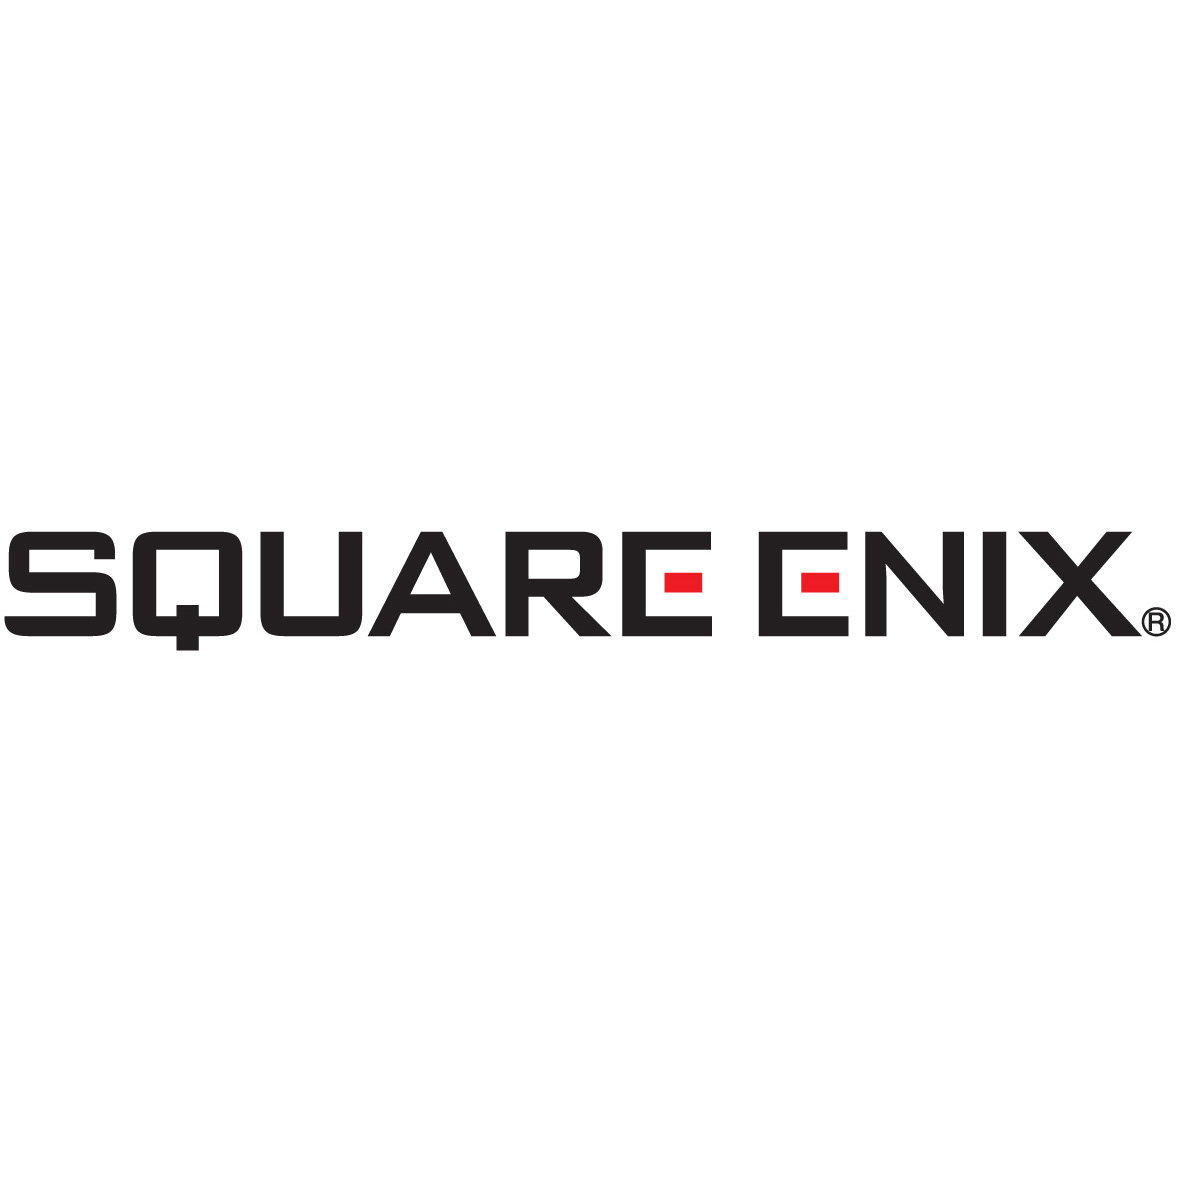 Square enix sale